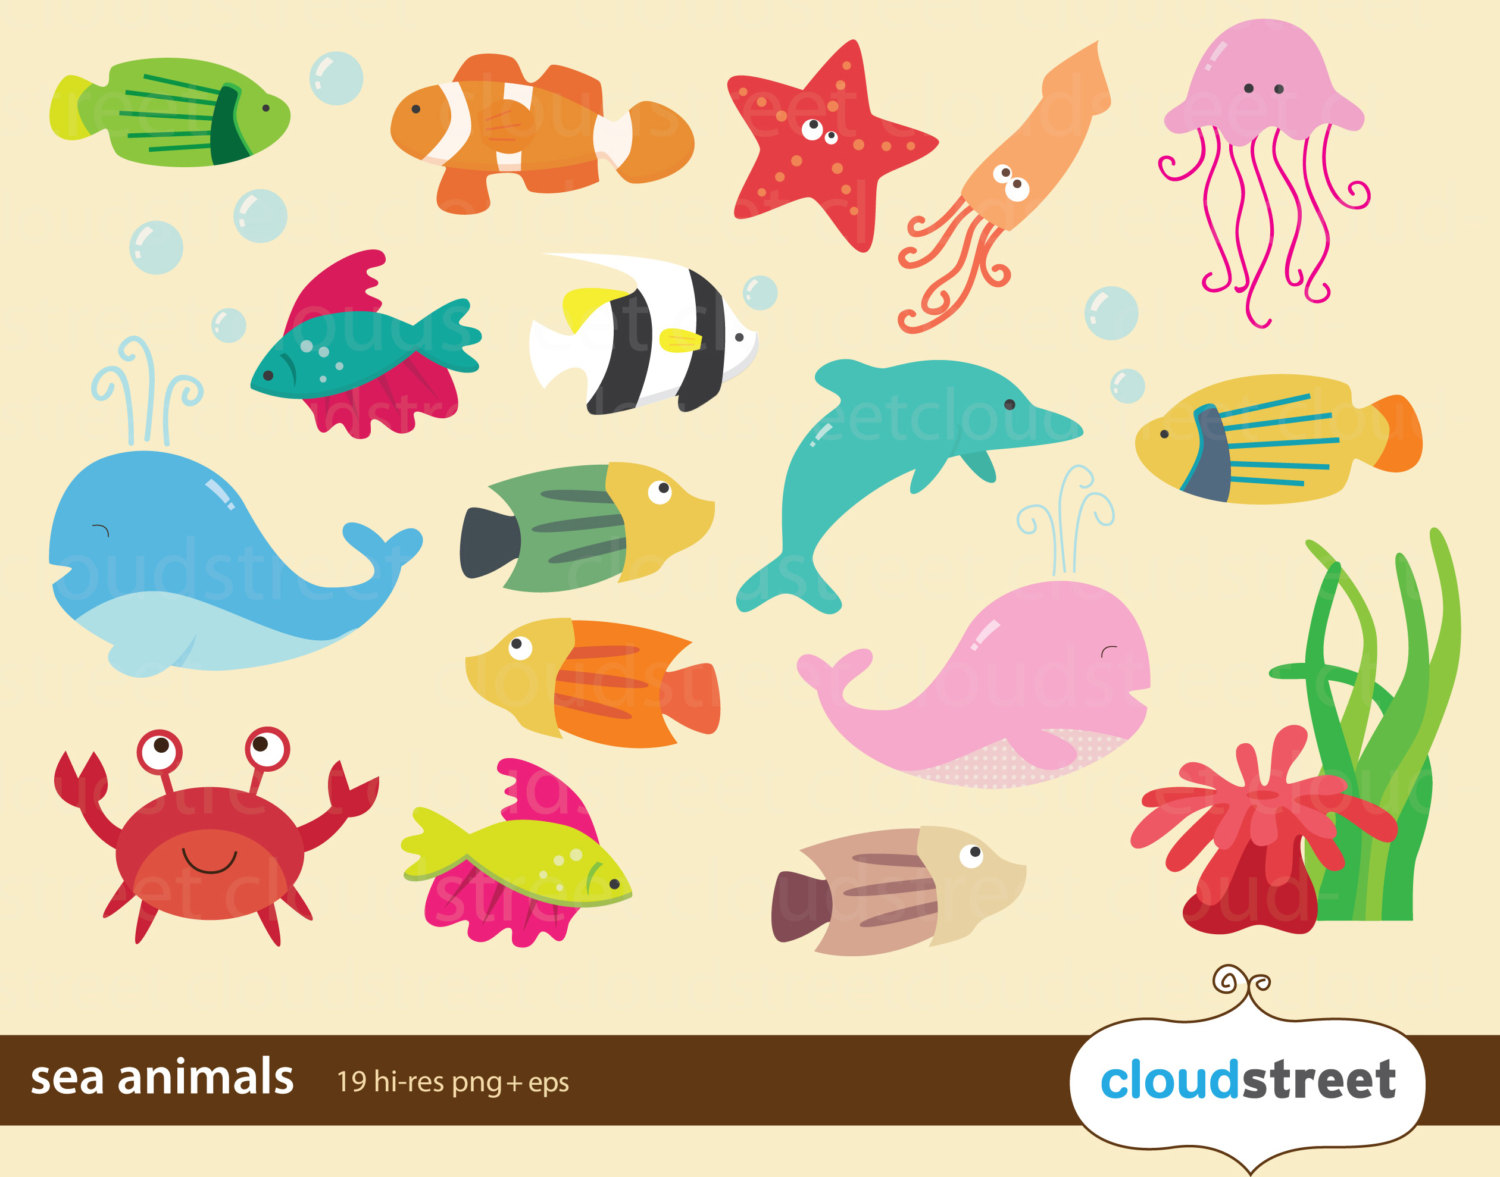 Sea Creatures Clipart Set .